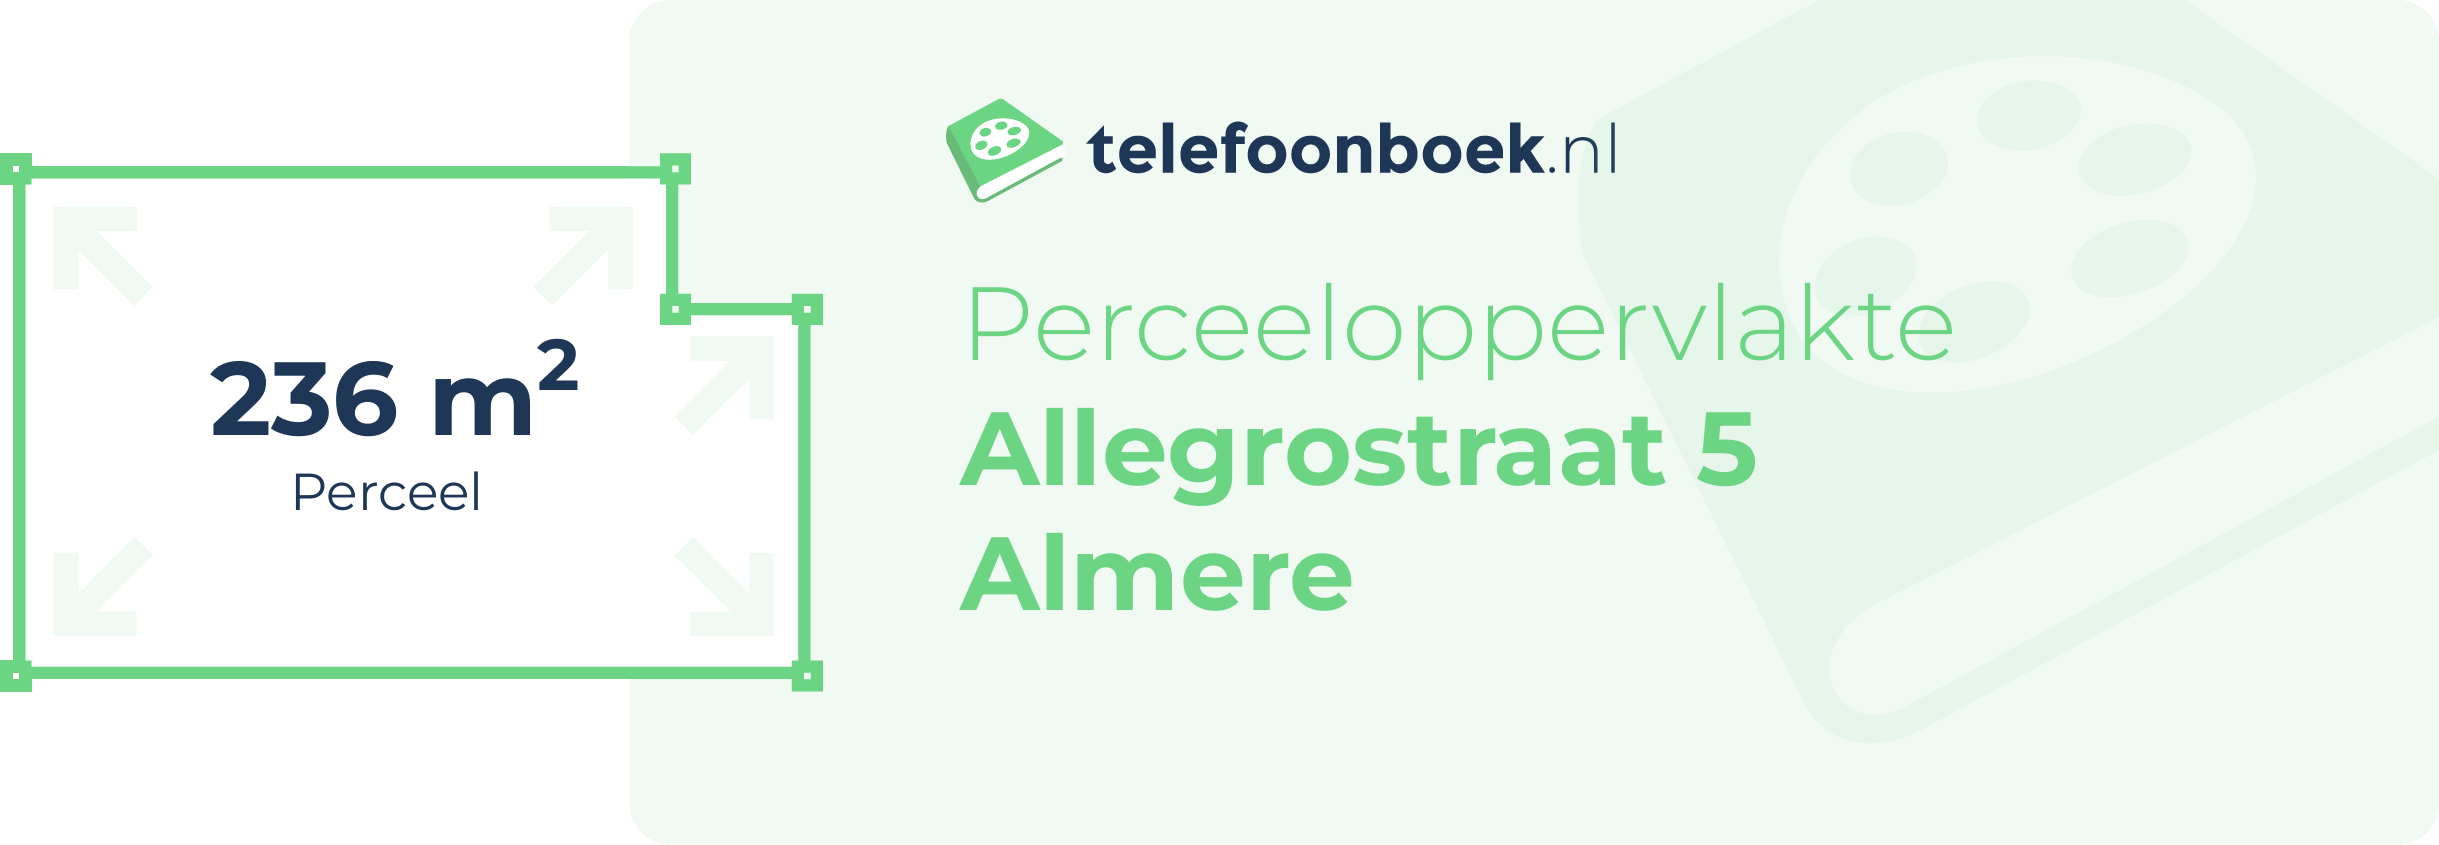 Perceeloppervlakte Allegrostraat 5 Almere